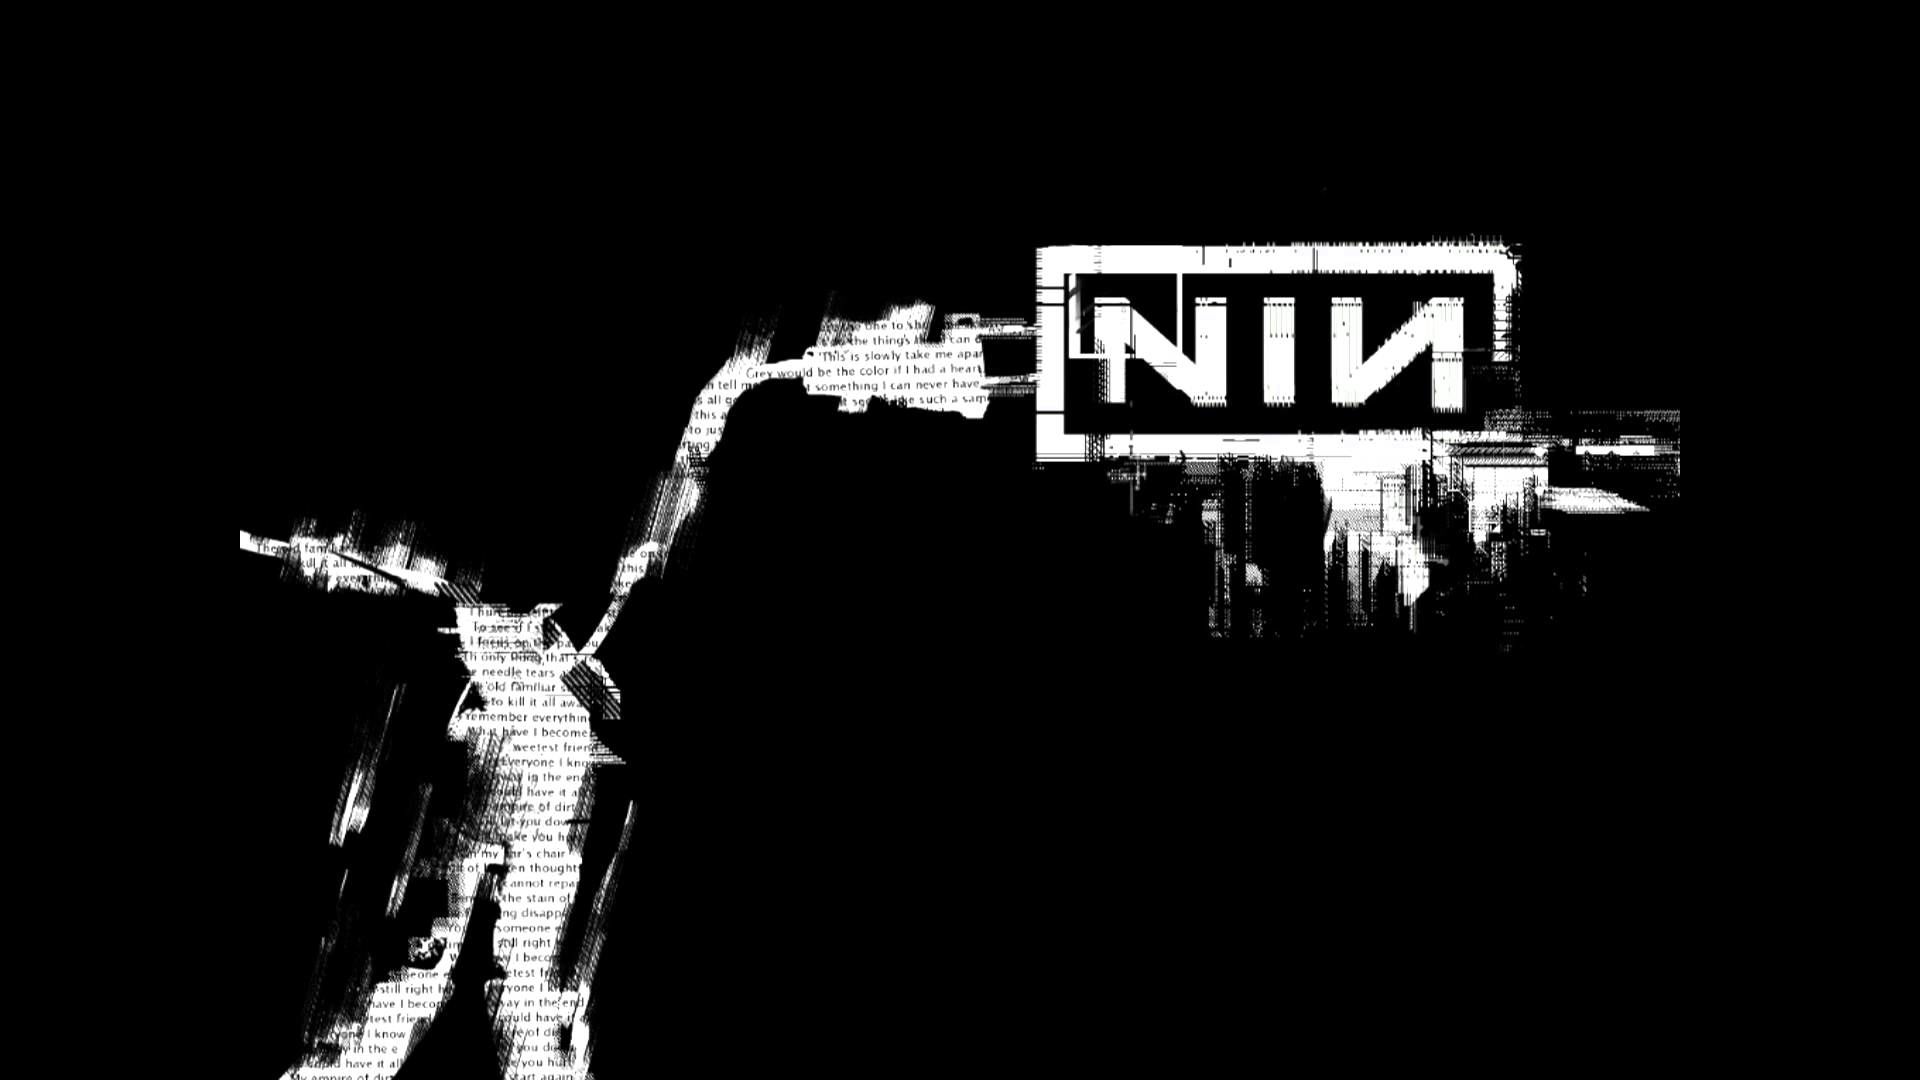 Nine Inch Nails - A Warm Place (Black Metal Instrumental Version)